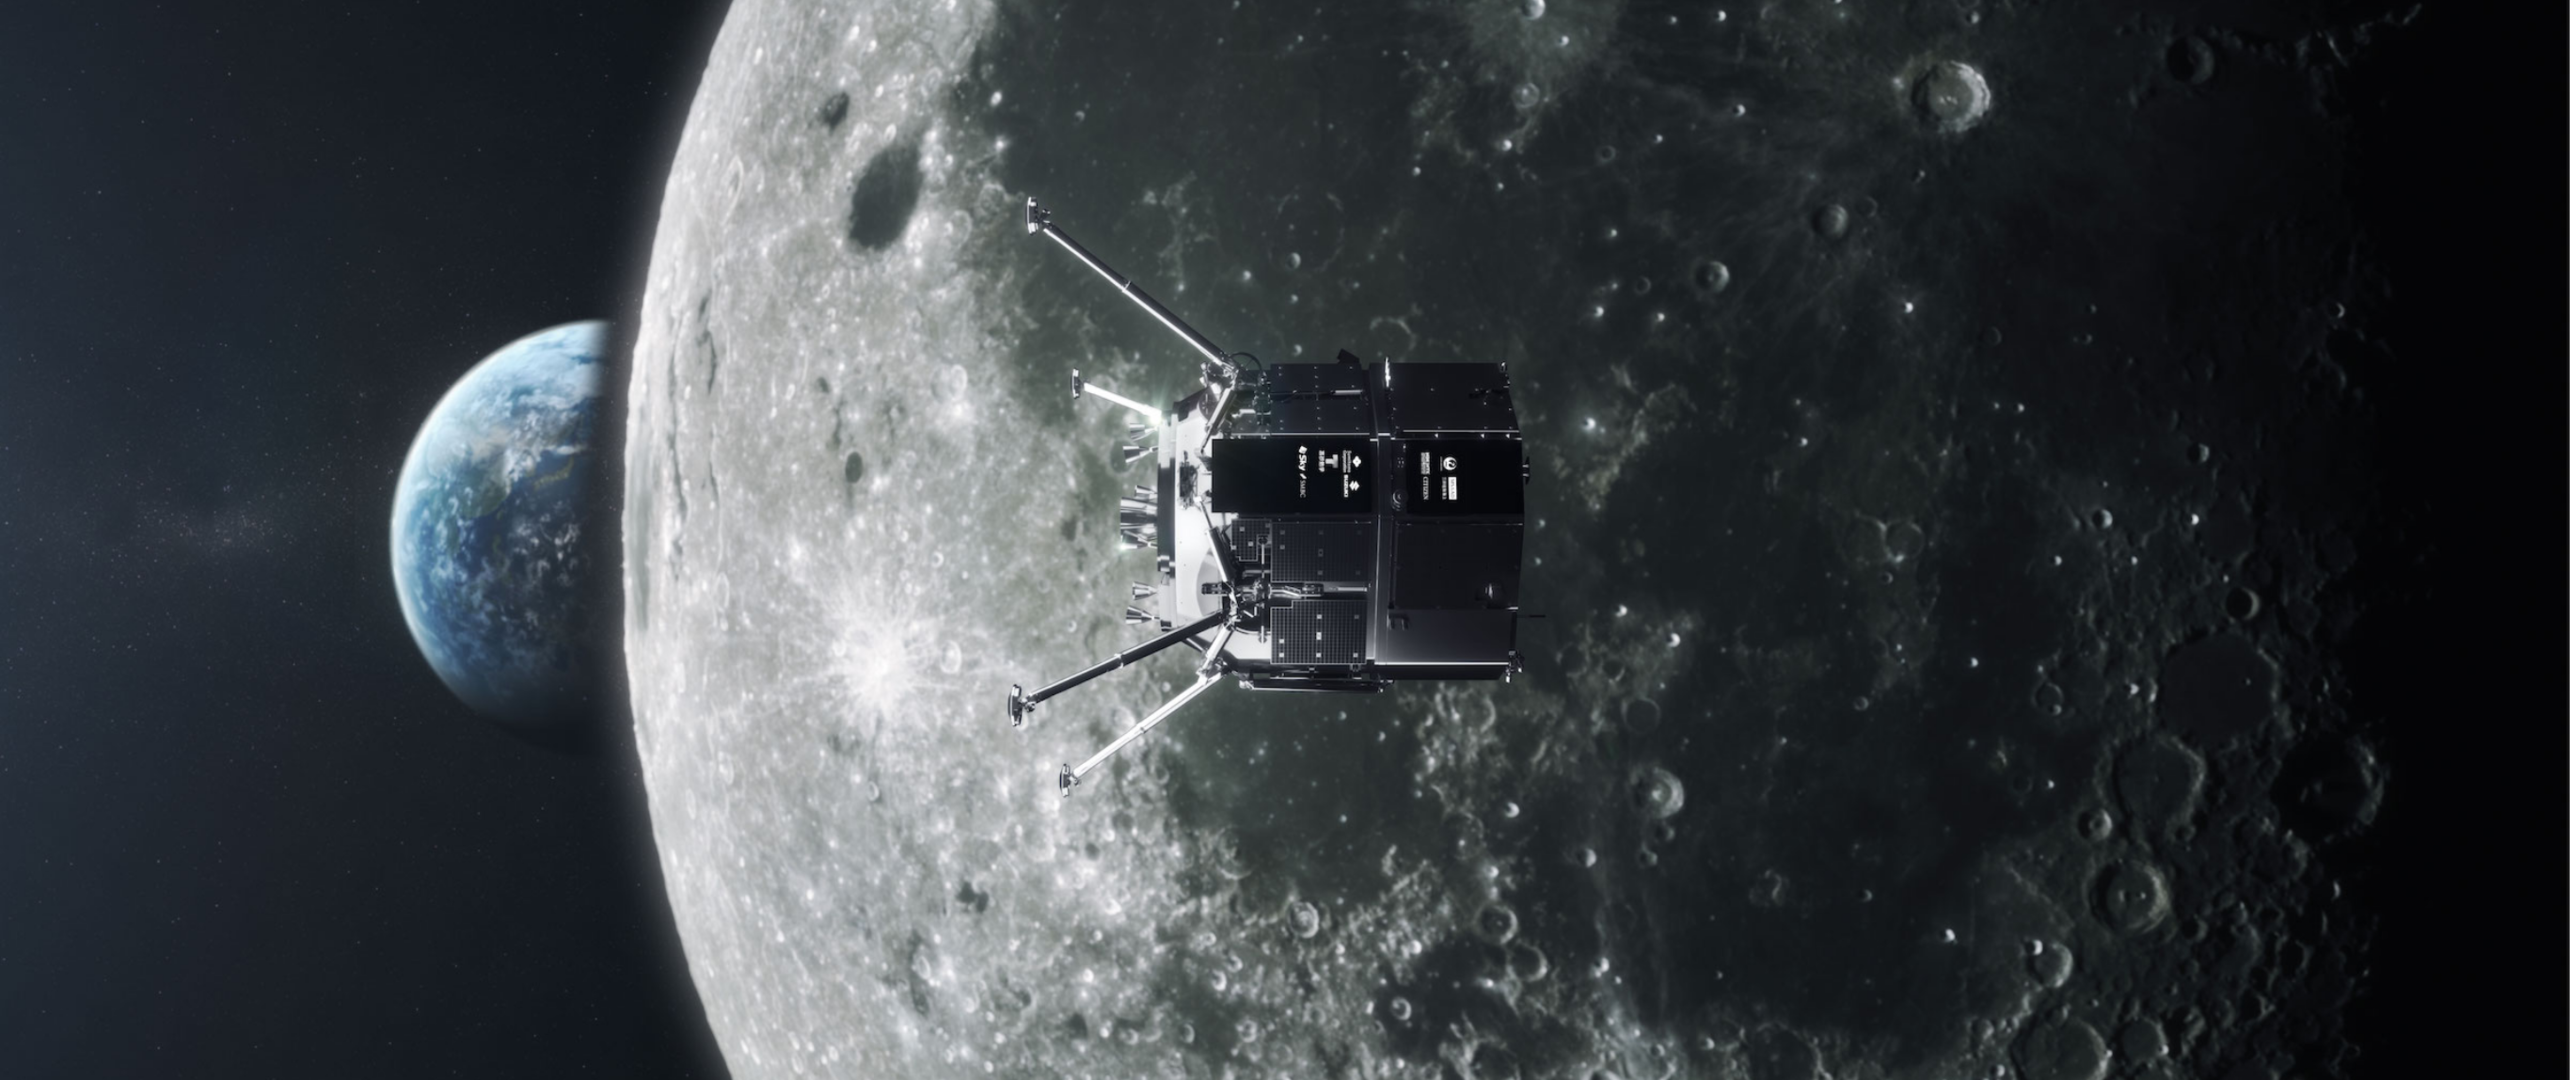 Hakuto-R lunar lander